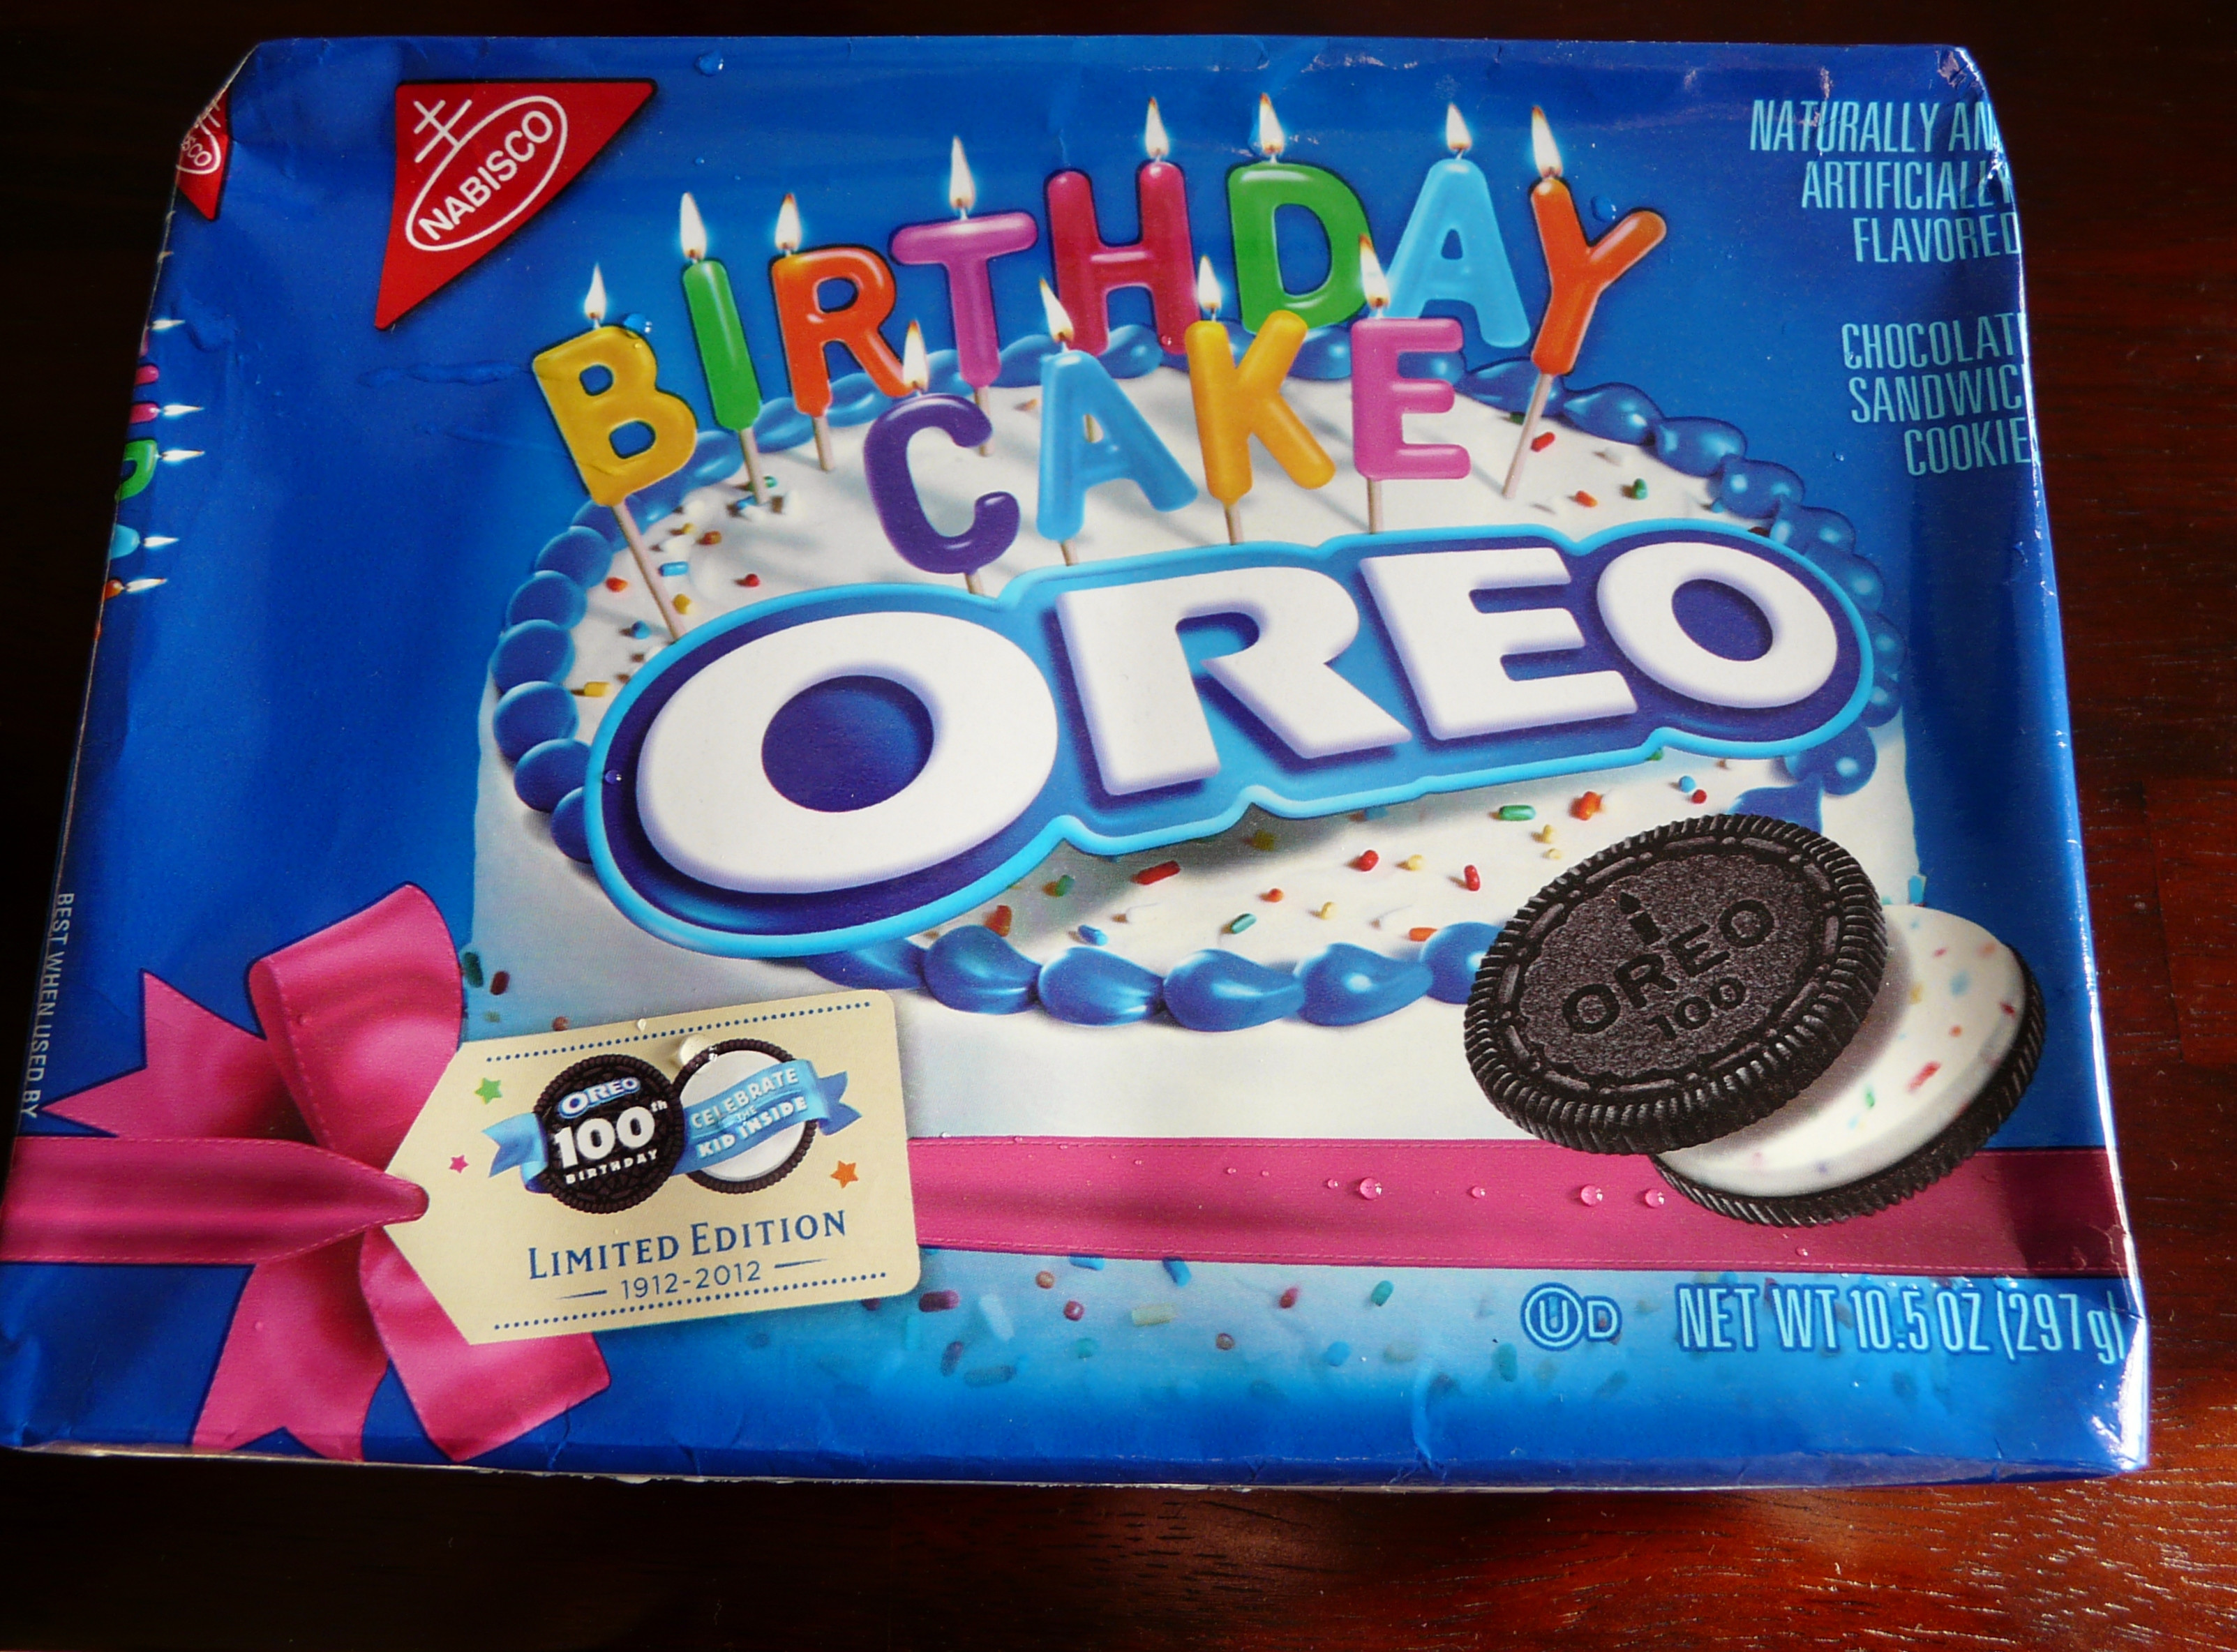 Best ideas about Birthday Cake Oreo
. Save or Pin Birthday Cake Oreo Now.